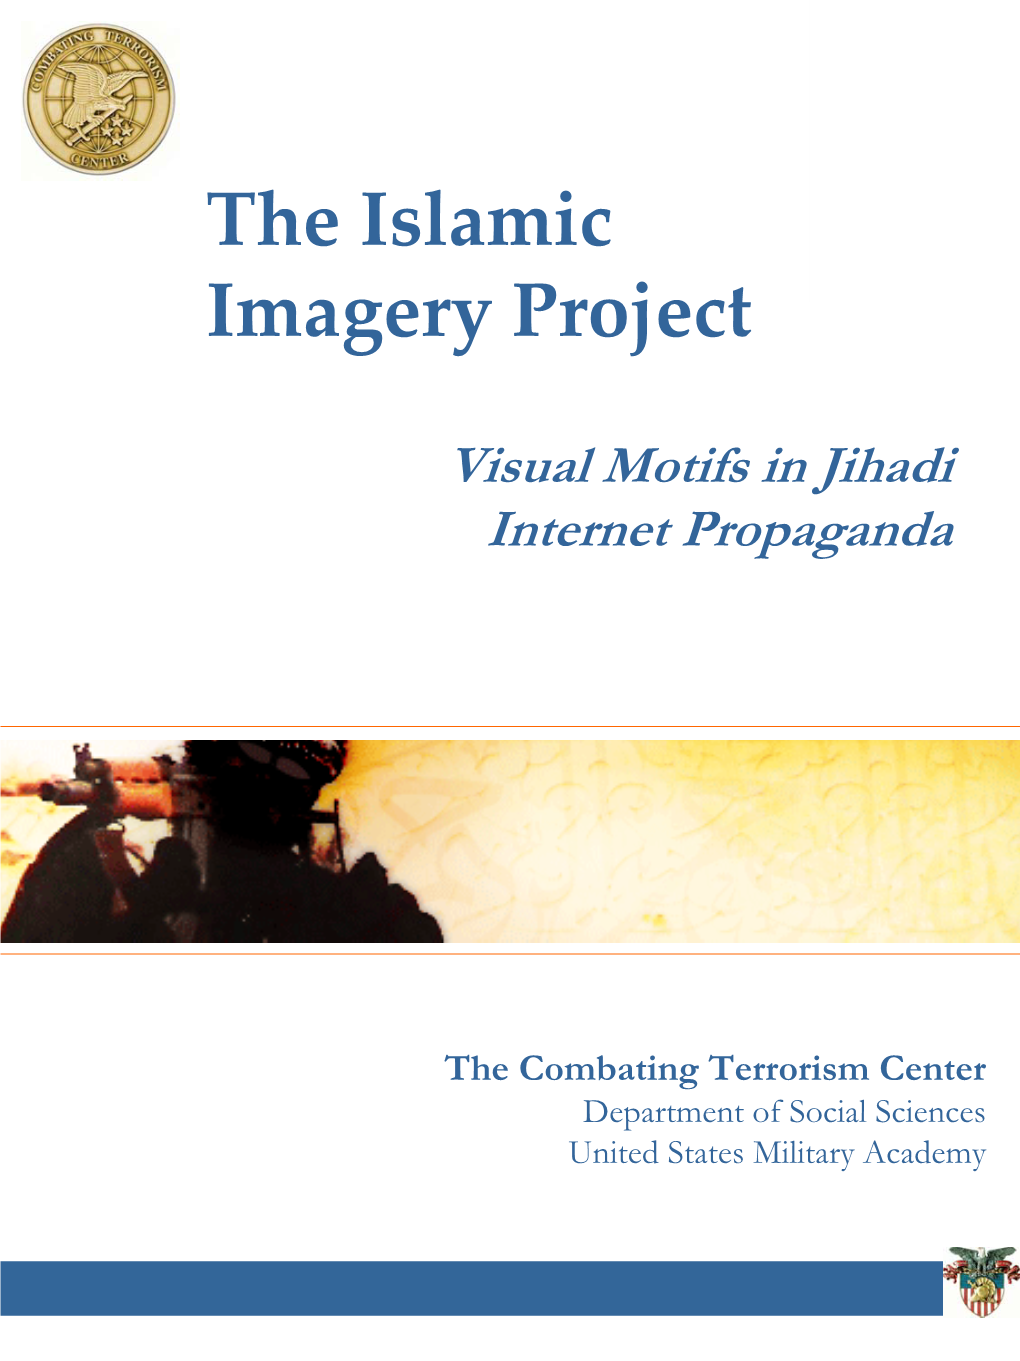 The Islamic Imagery Project: Visual Motifs in Jihadi Internet Propaganda